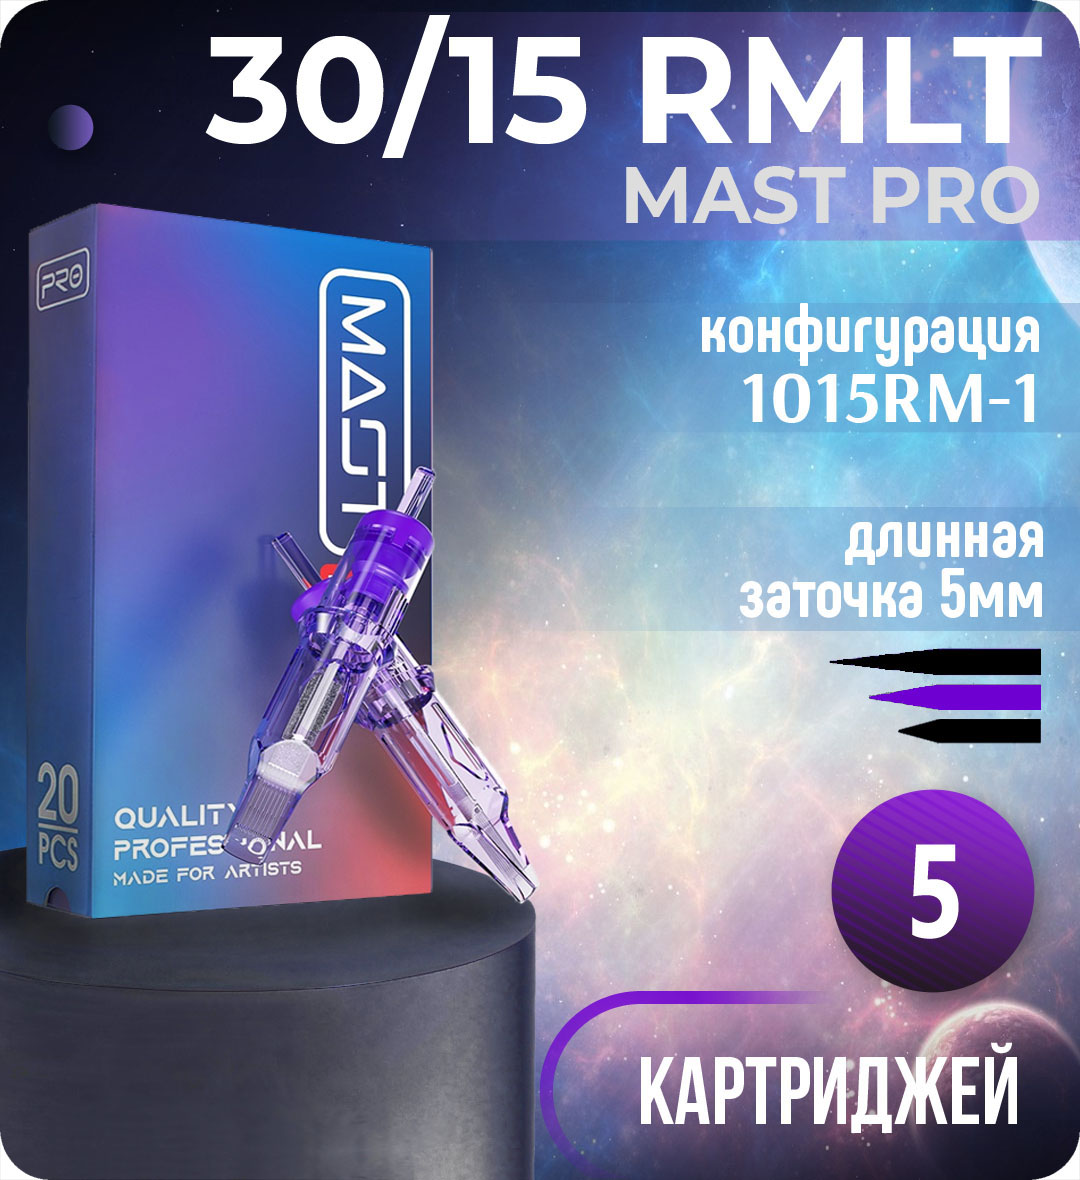 Картриджи Mast Pro 30/15 RMLT (1015RM-1) для тату, перманентного макияжа и татуажа Dragonhawk 5шт